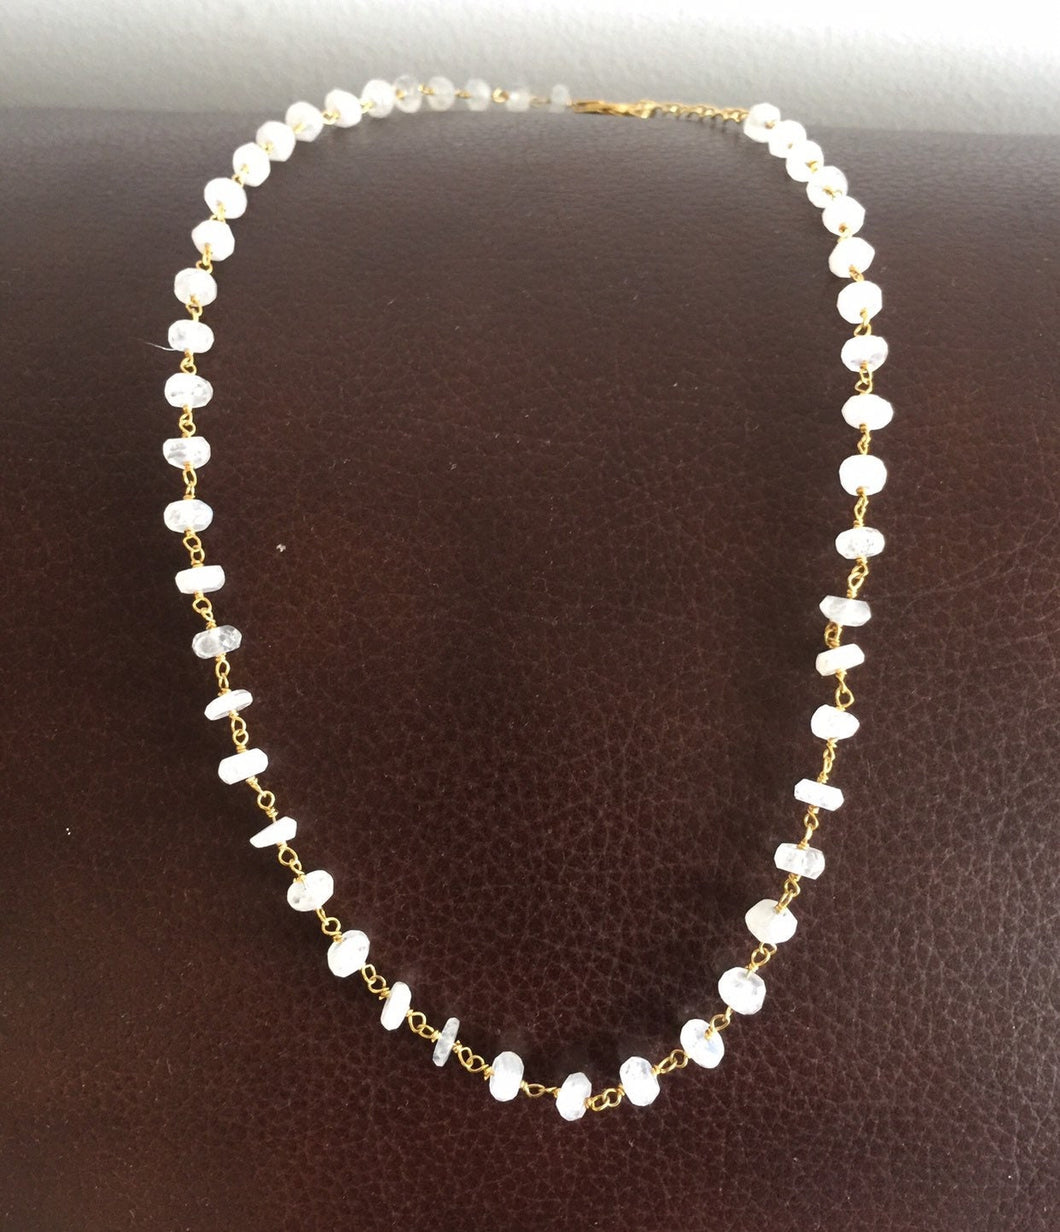 gem stone necklace,silver necklace,sterling necklace,moonstone necklace,sterling silver necklace, sterling moonstone necklace